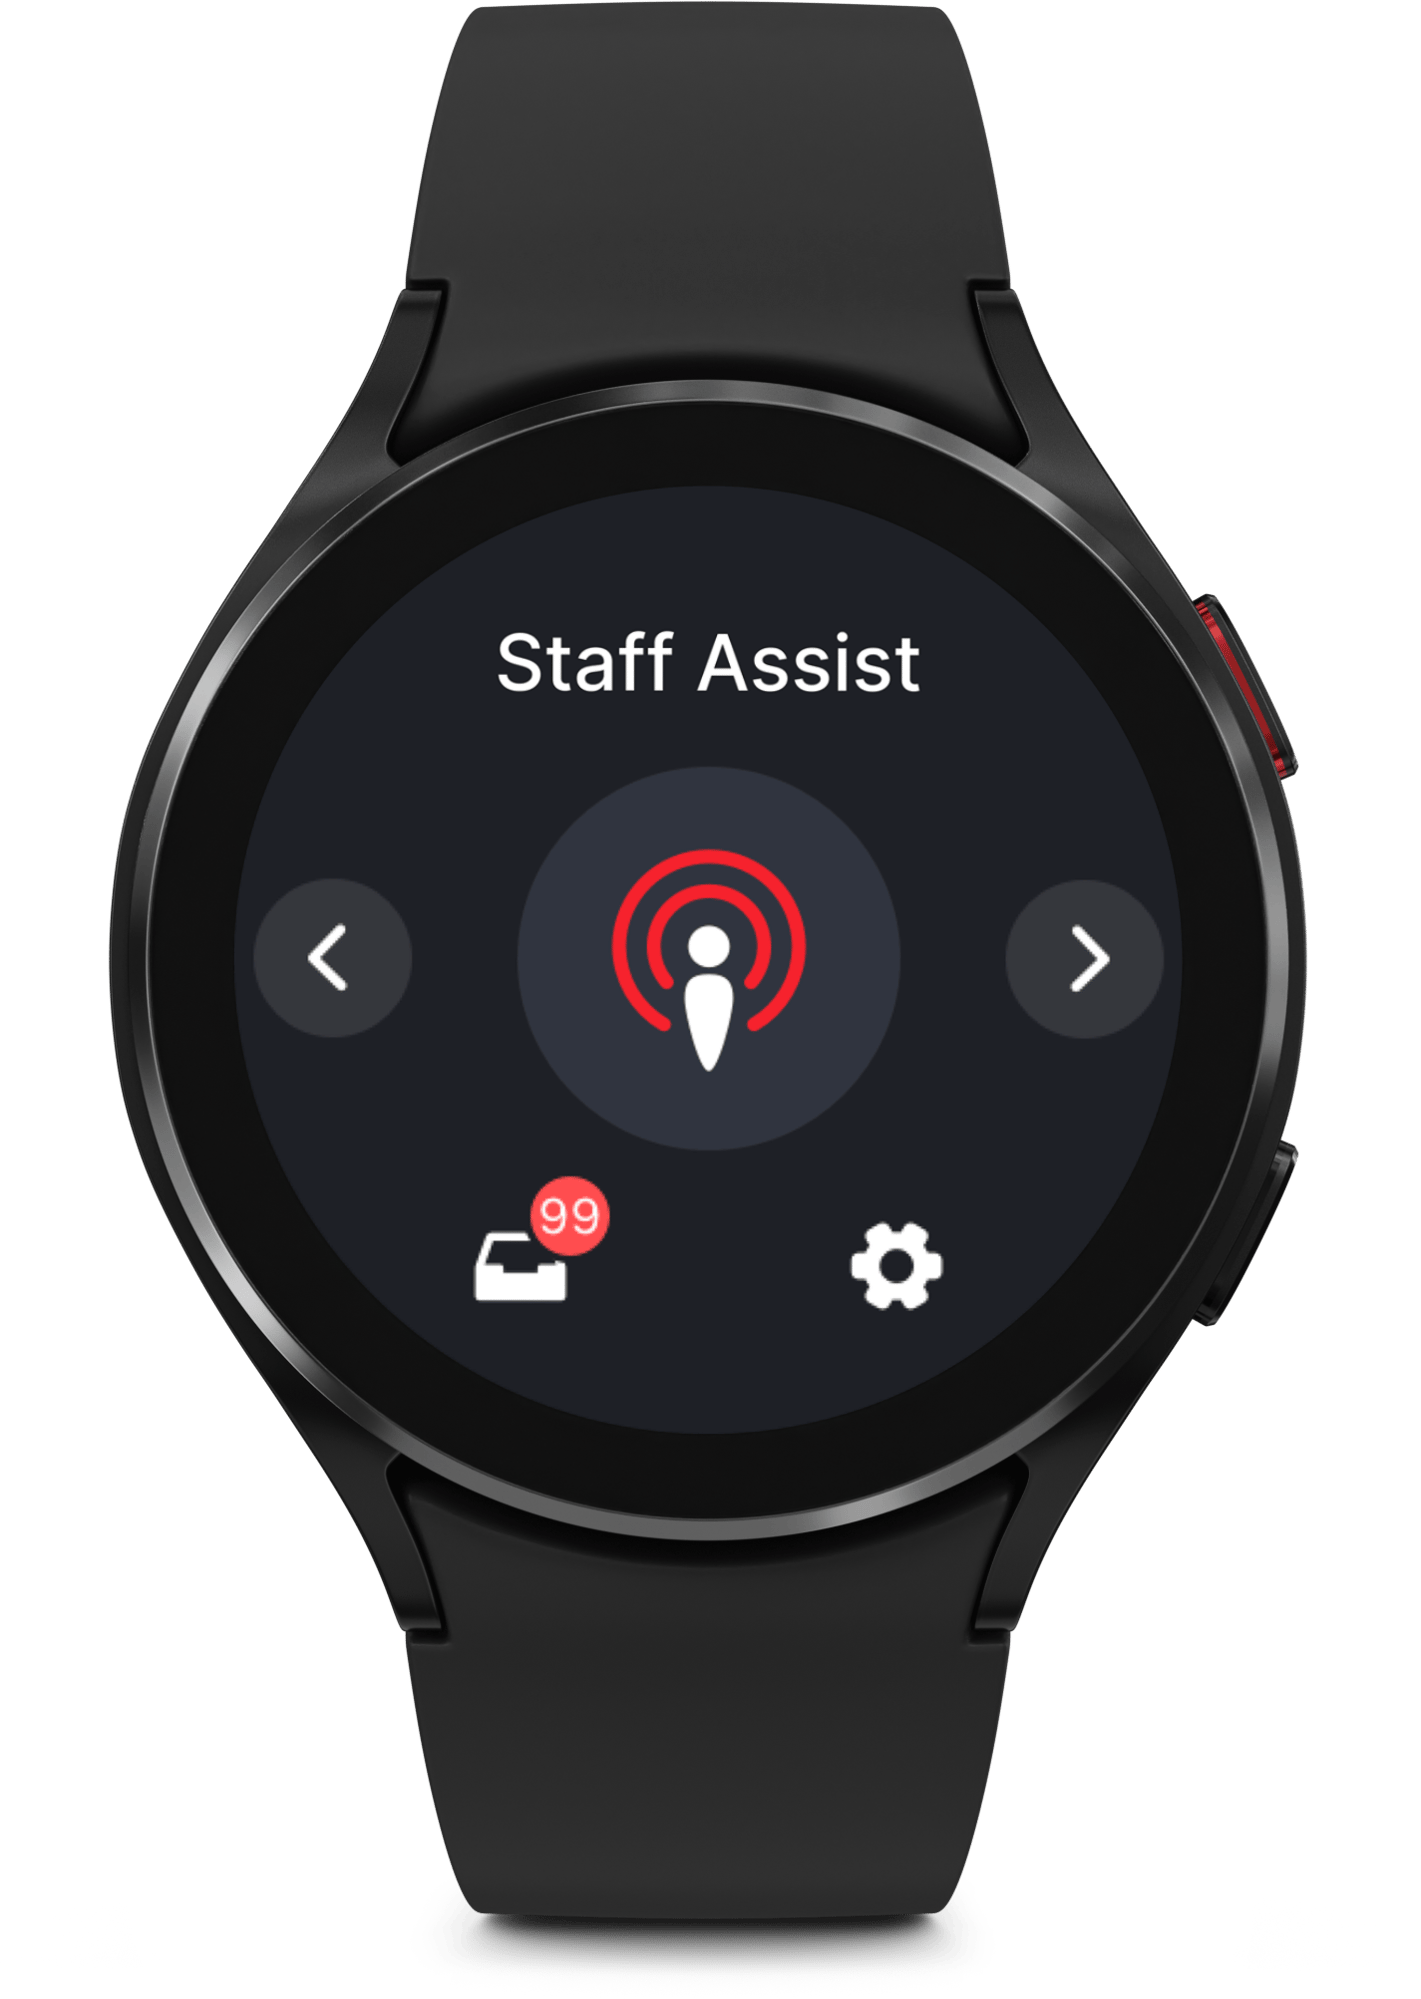 Send Staff Assist Alert (Android)